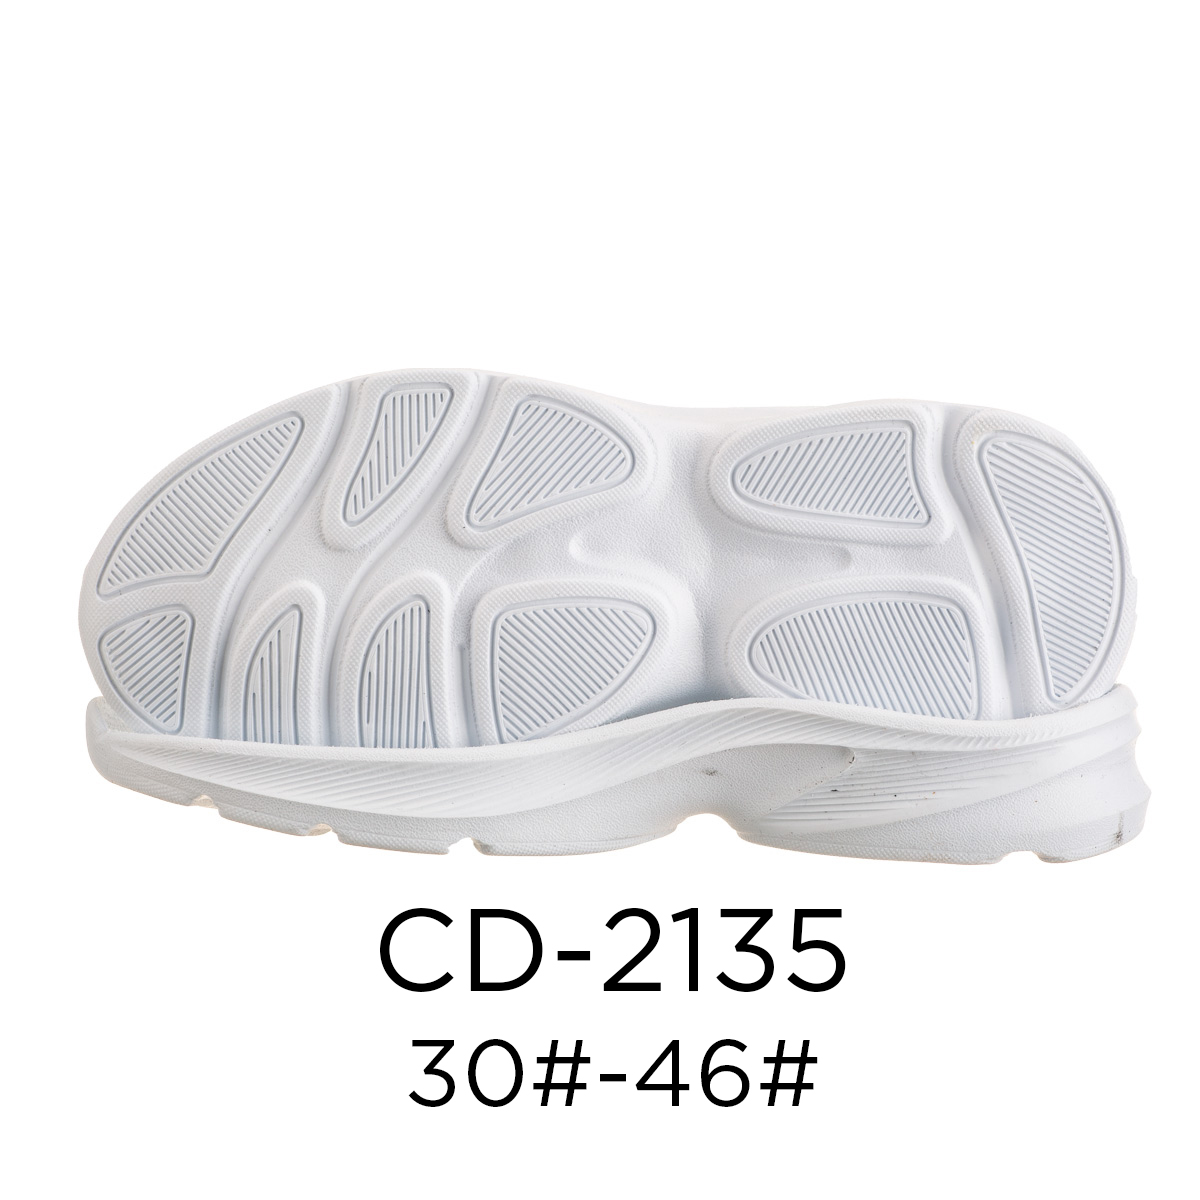 CD-2135